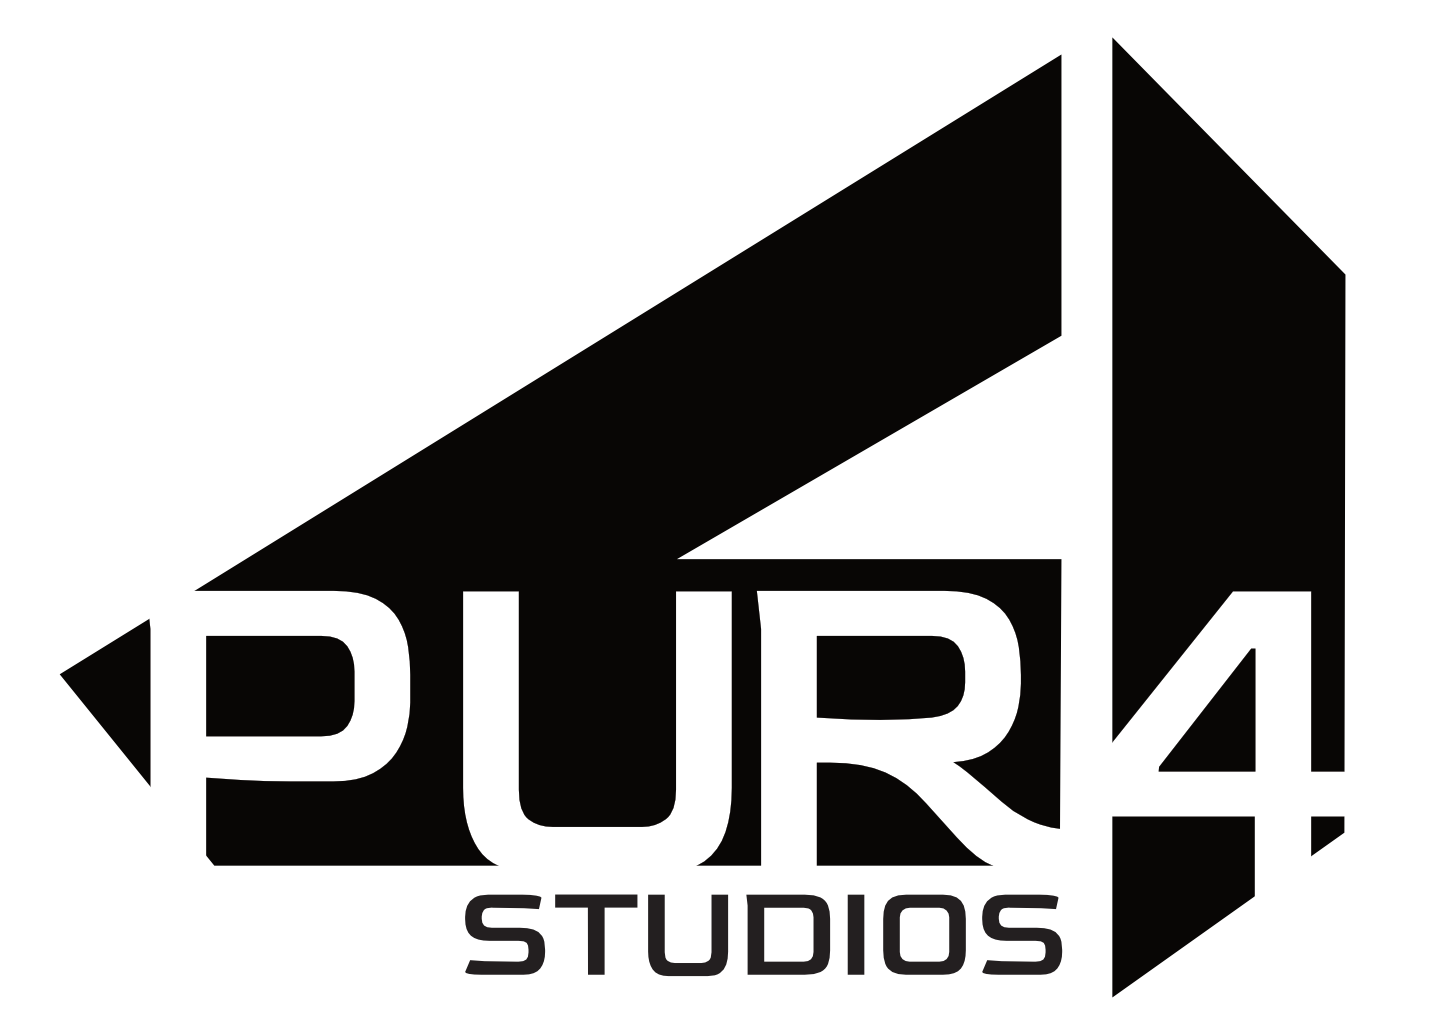 PUR4 Studios Logo